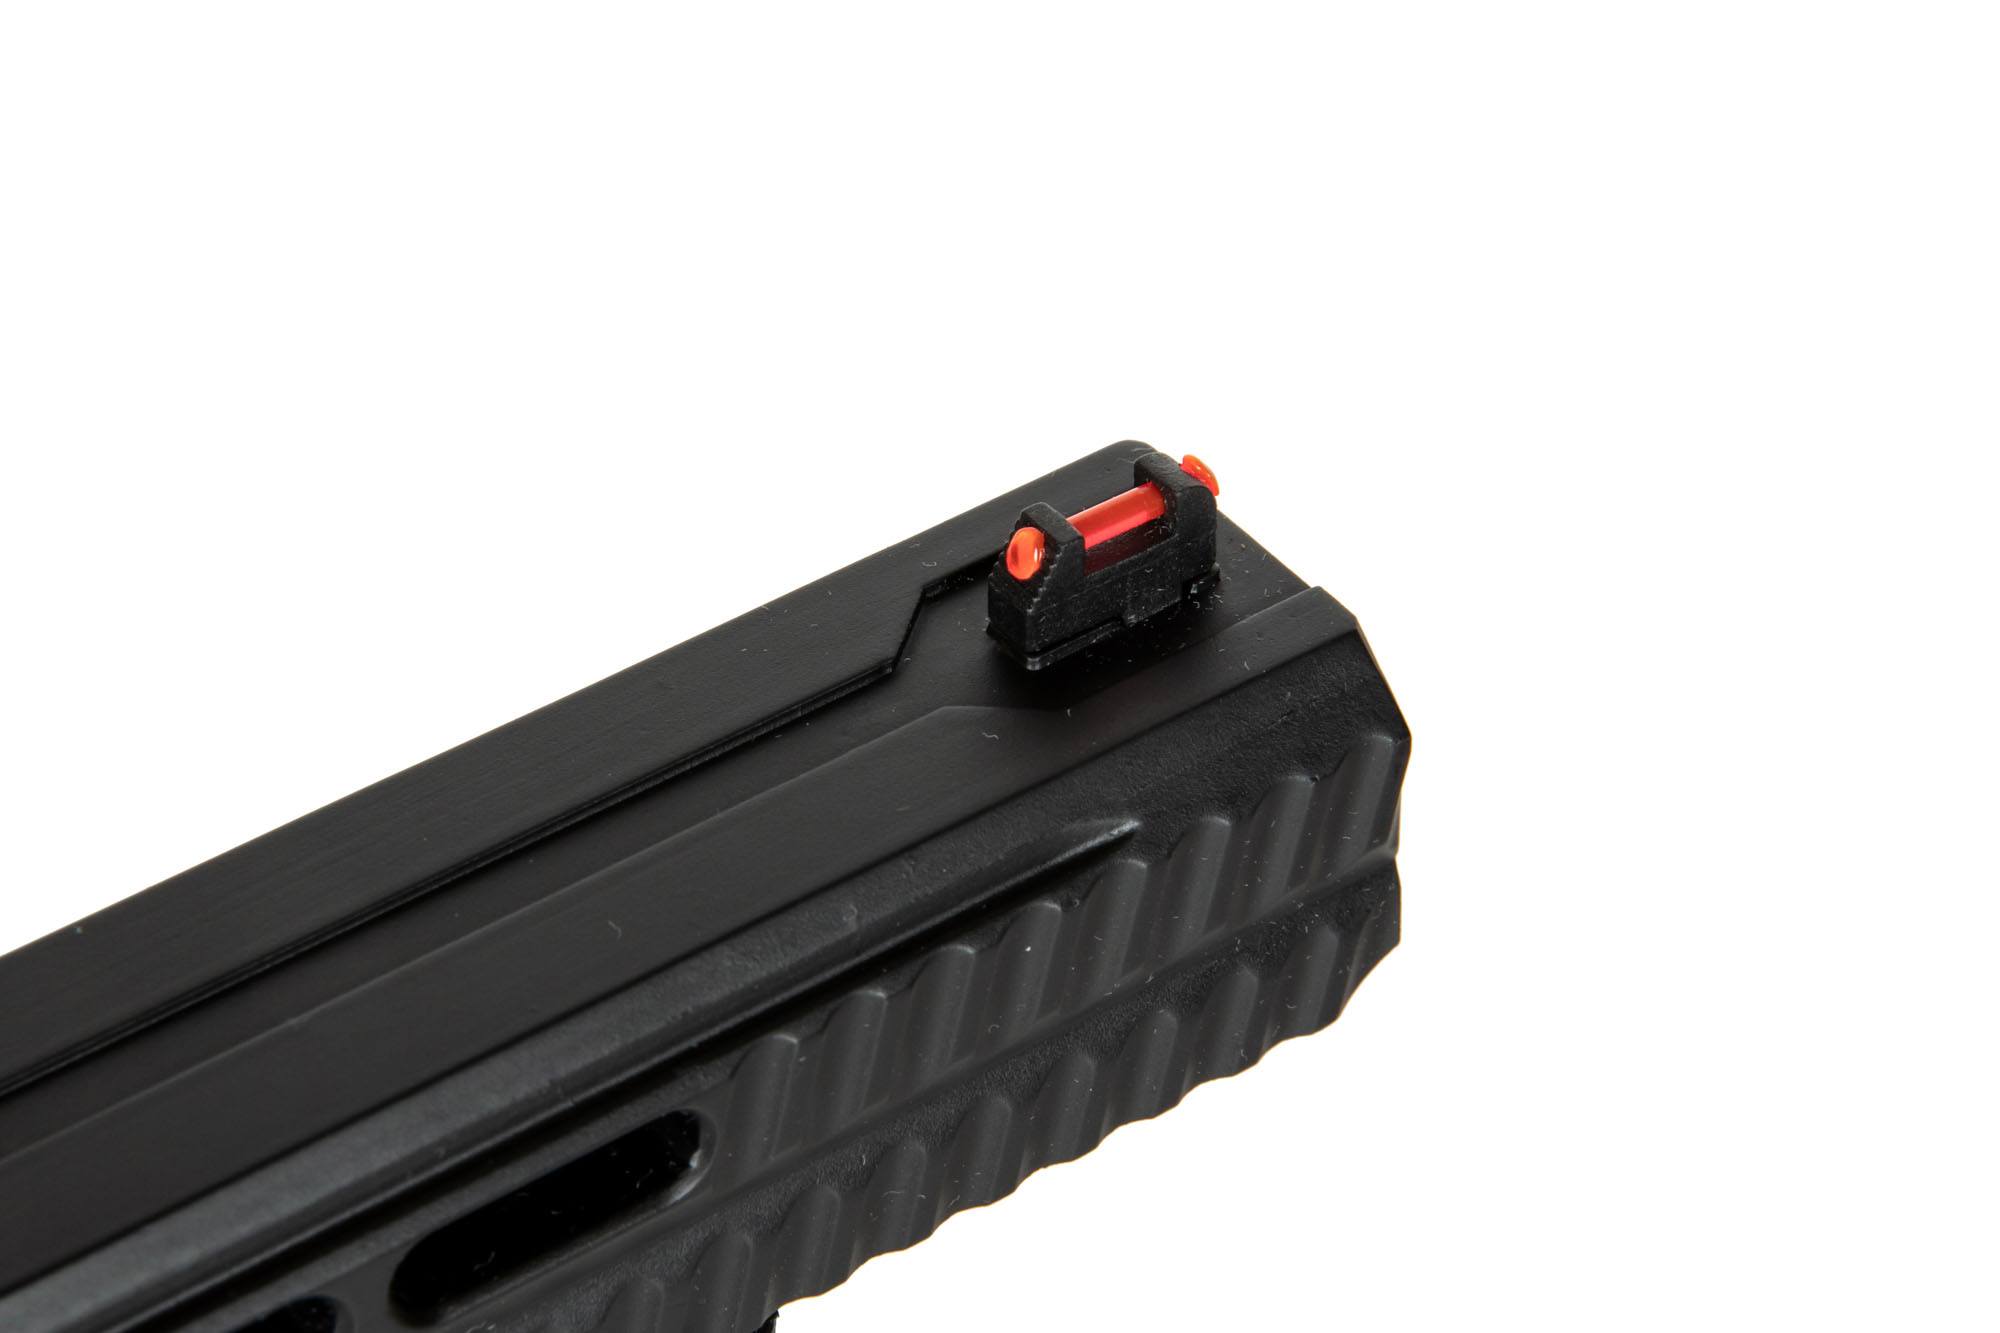 Facelift Pistol ACP606 - Black